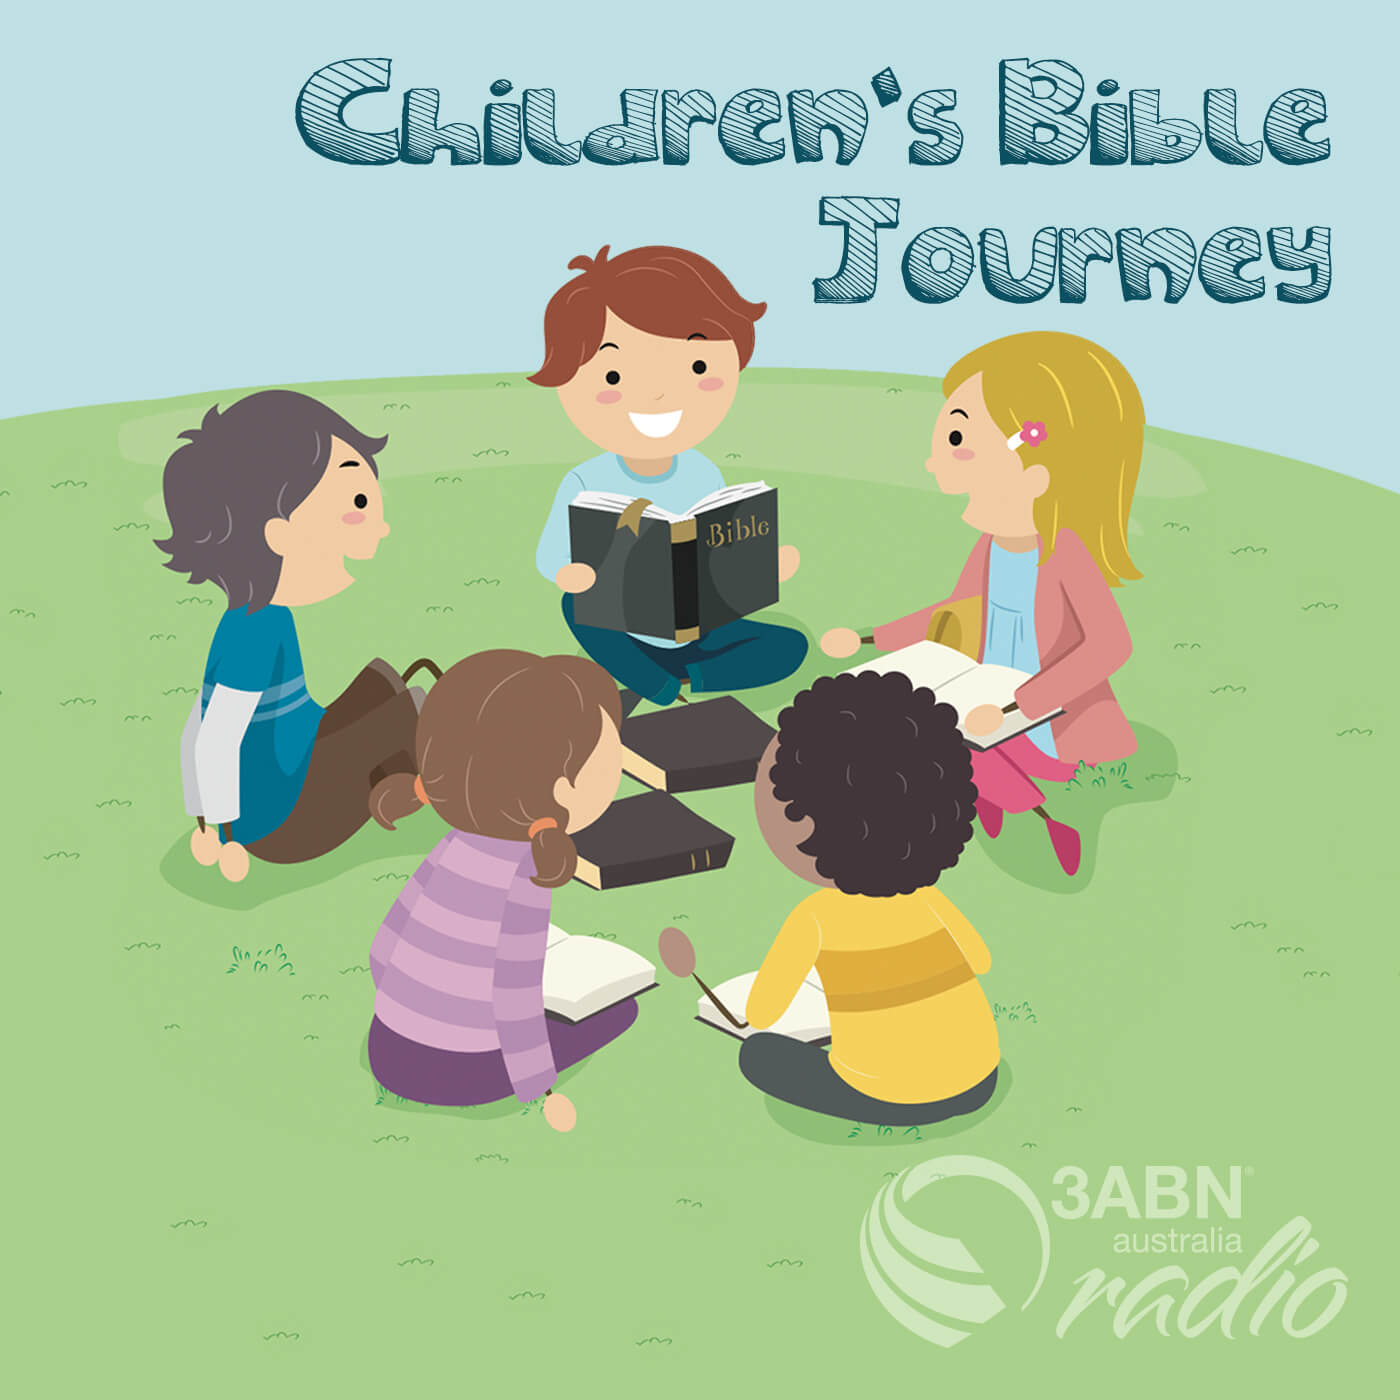 Children's Bible Journey - 2220